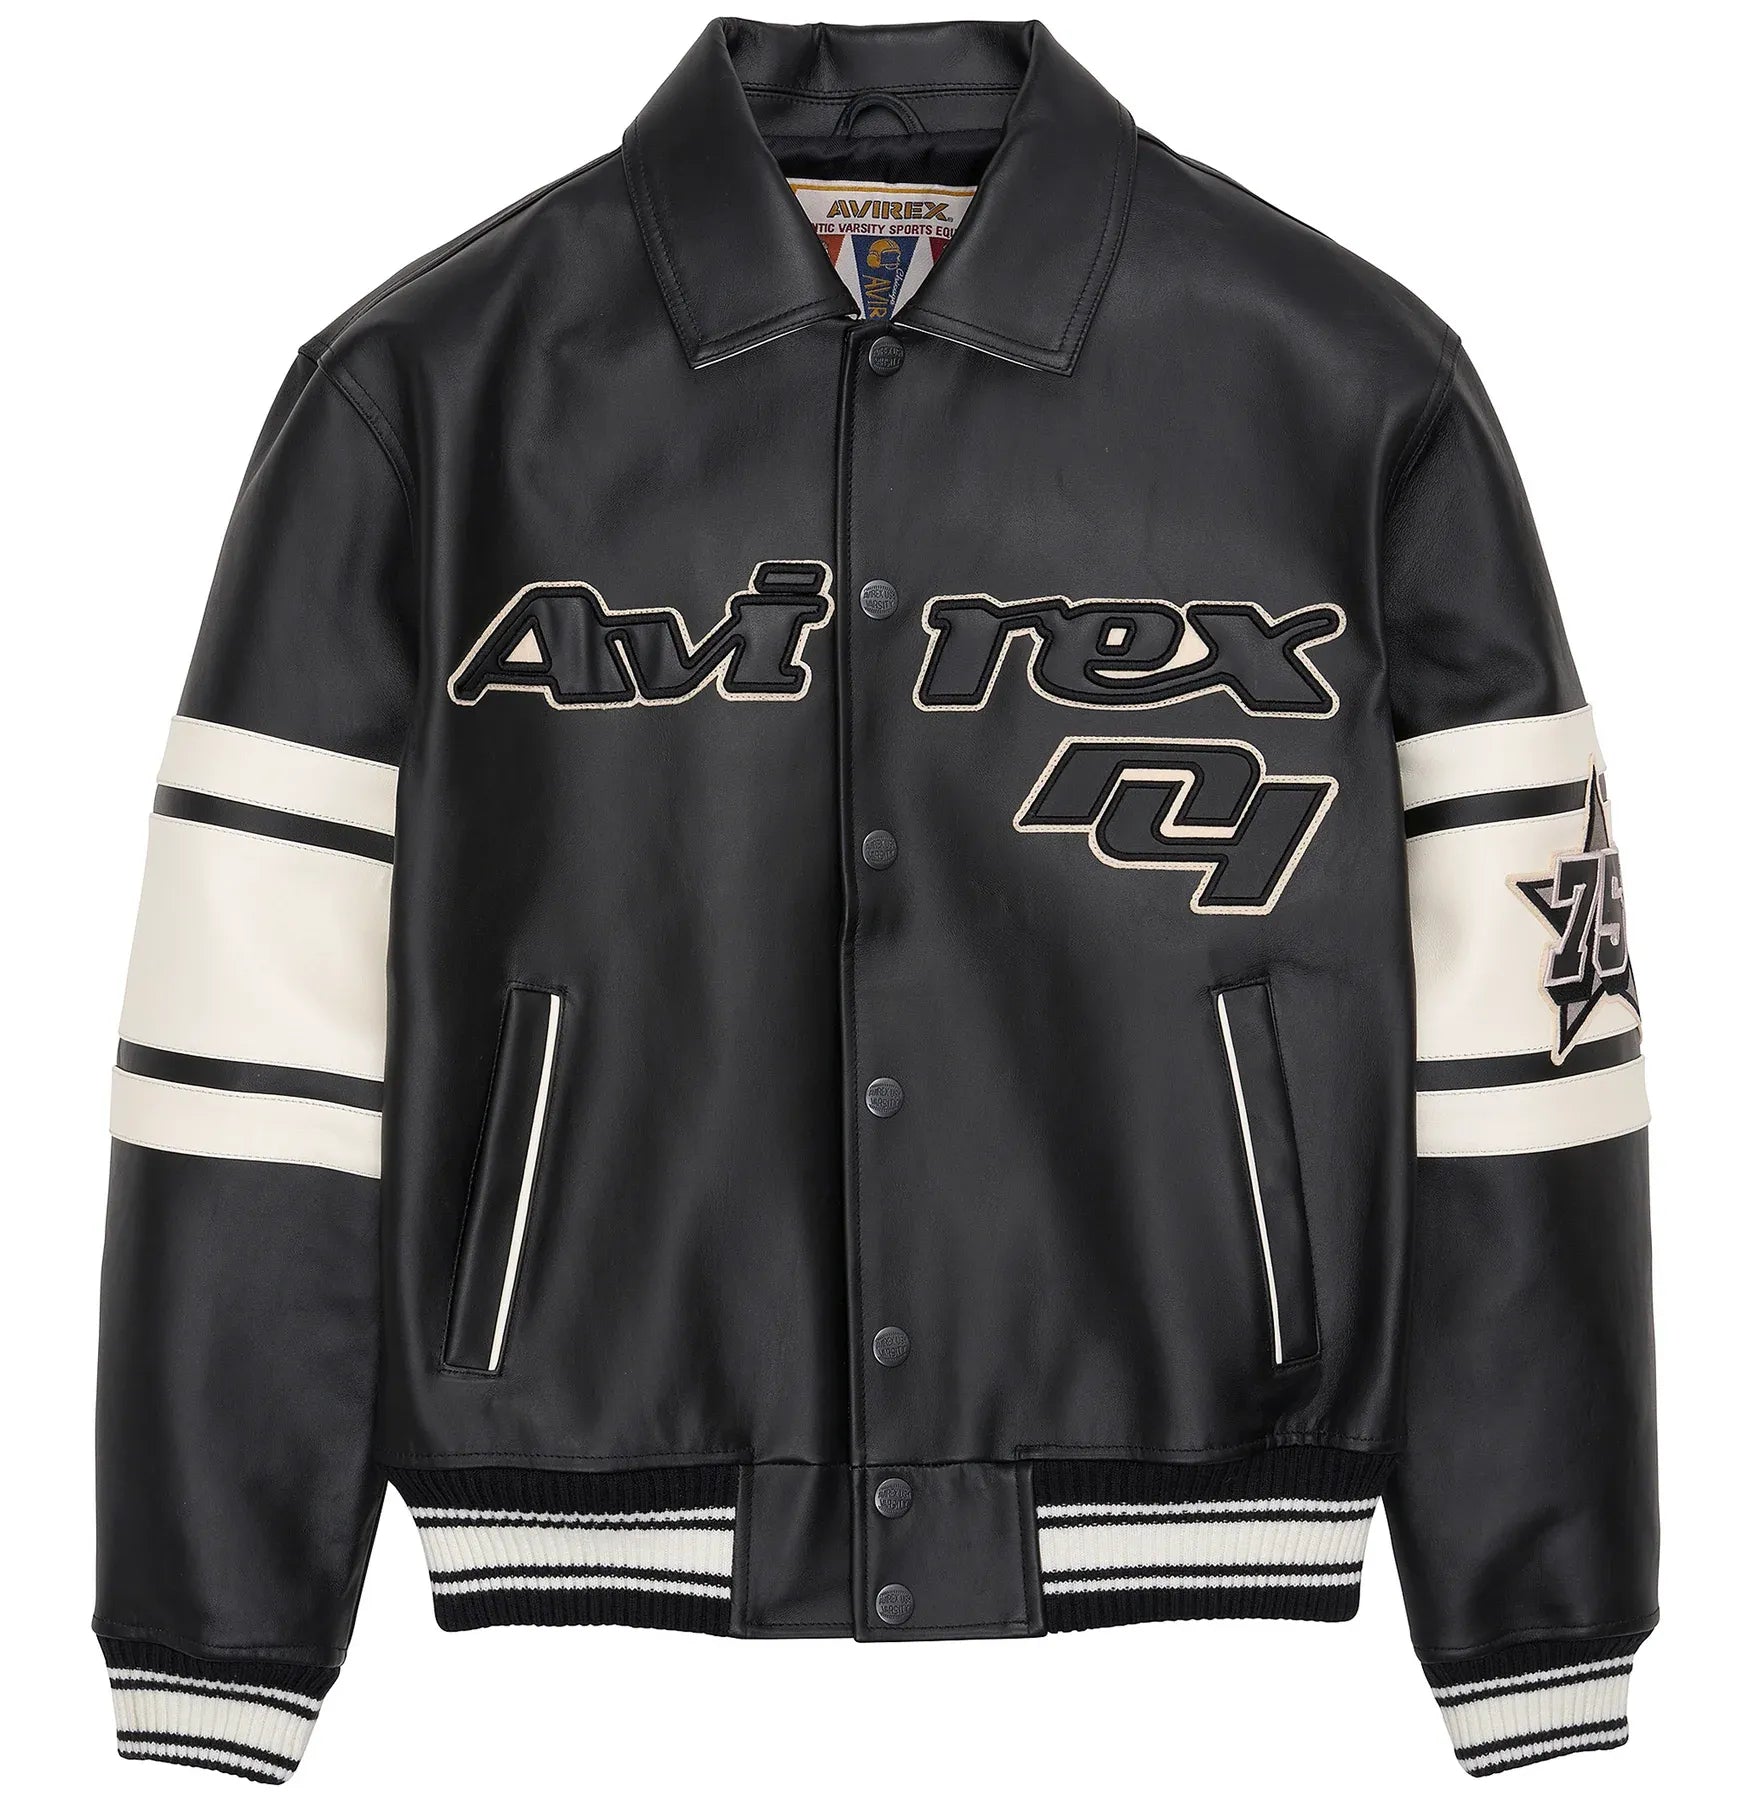 avirex-brooklyn-jacket-black-front